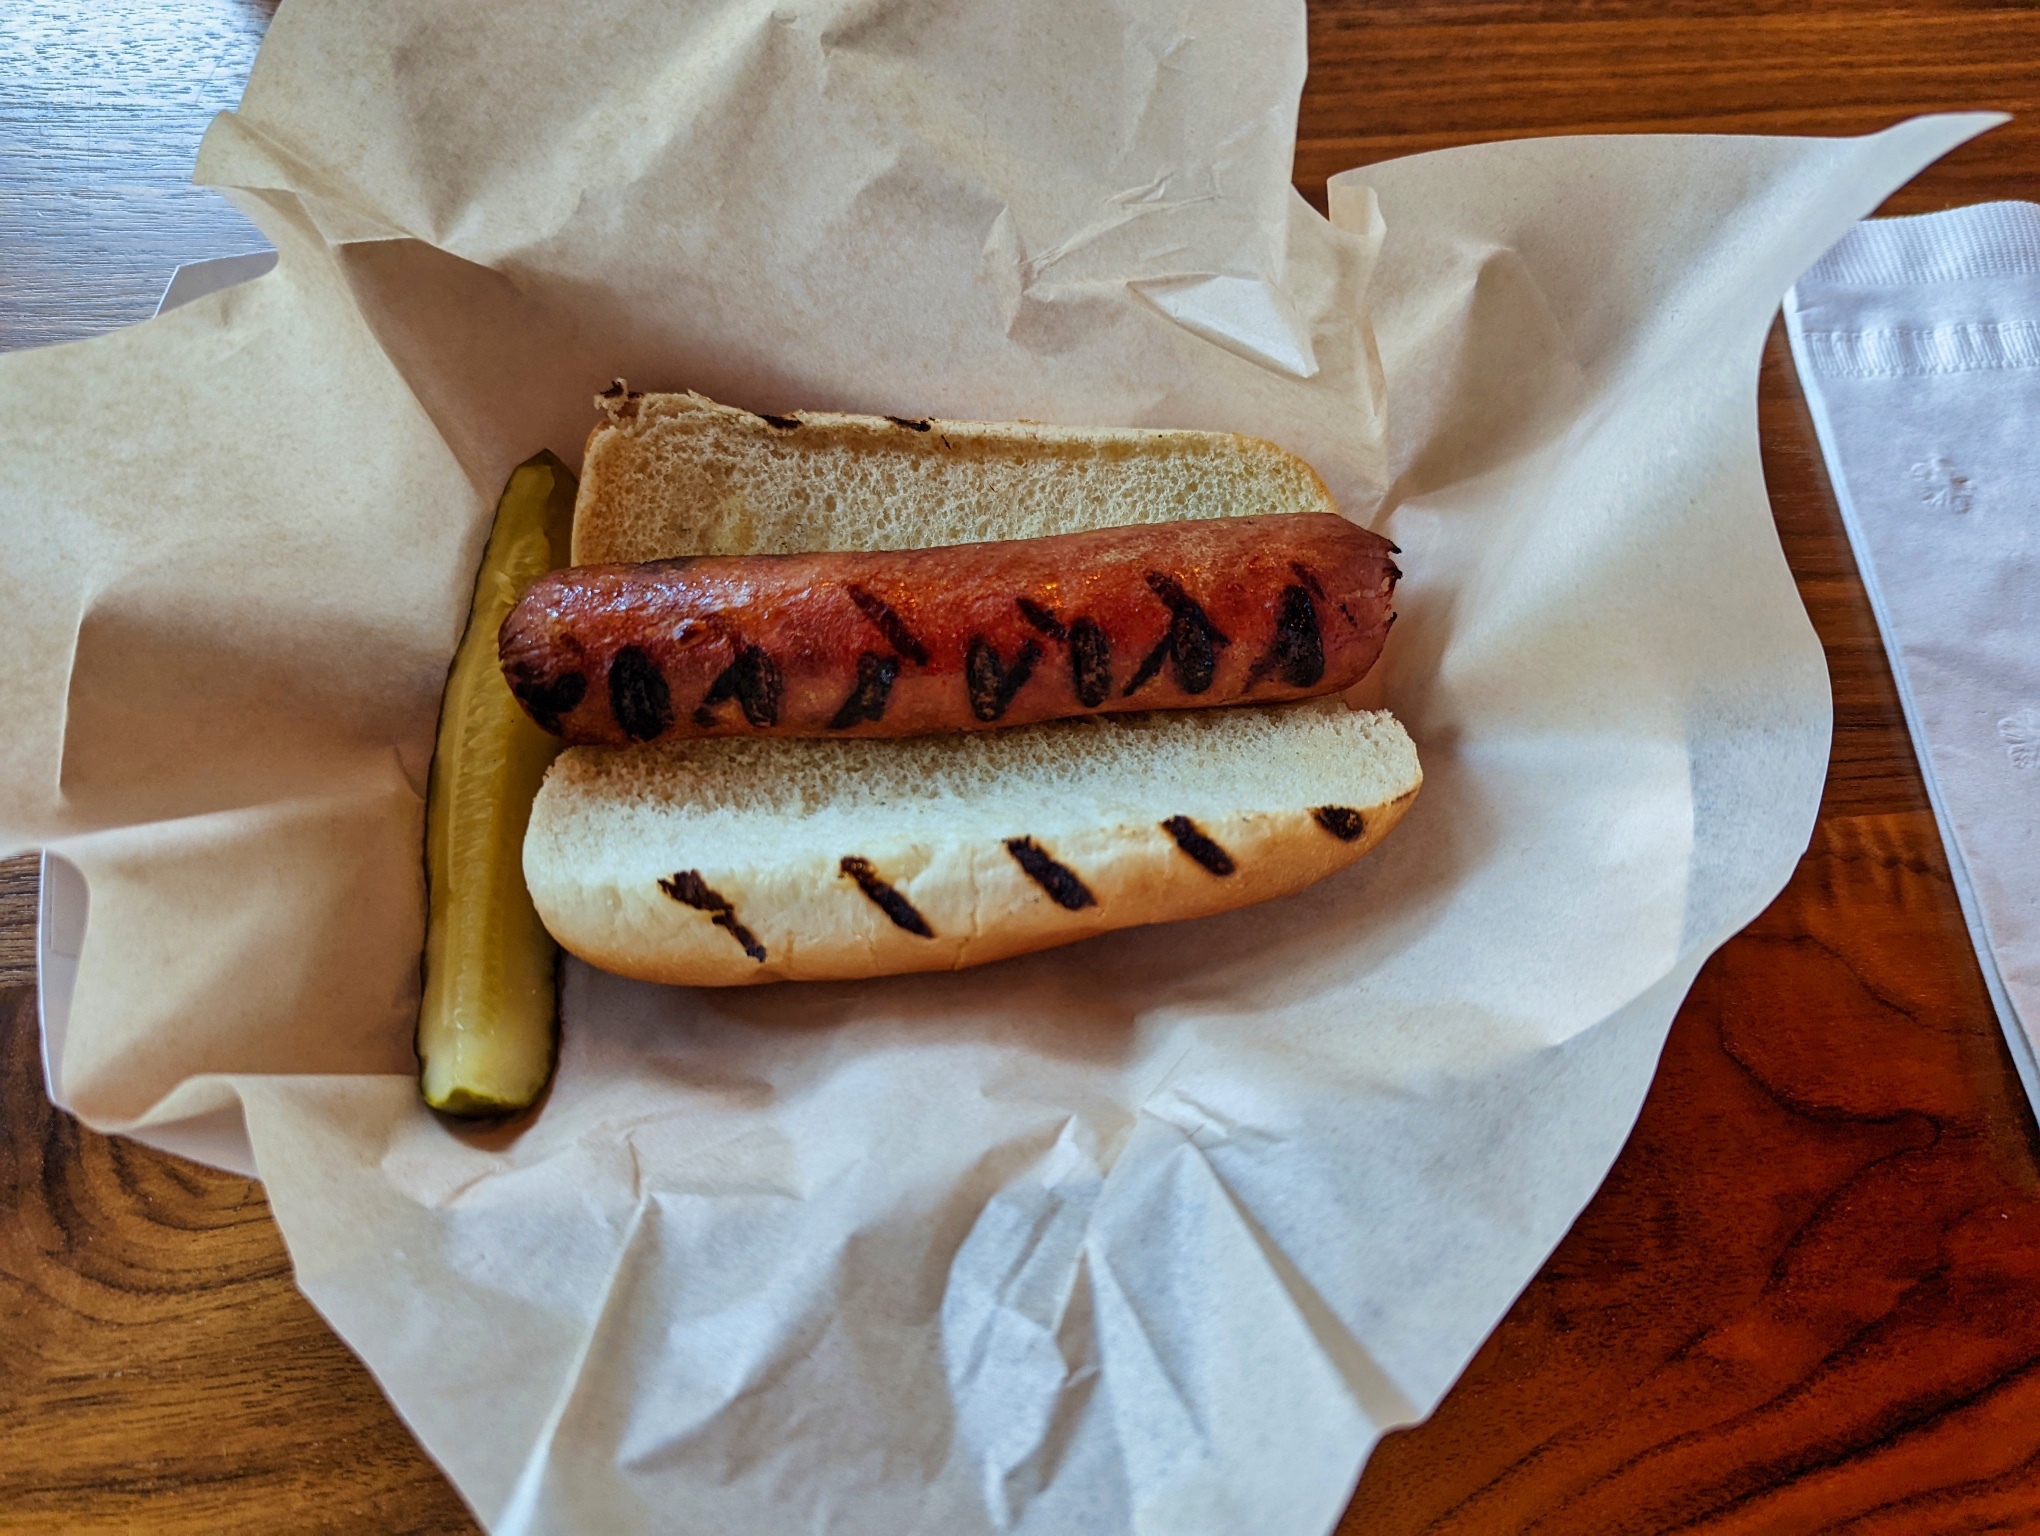 Photo of the hot dog at Oak Brook Golf Club in Oak Brook, Illinois.